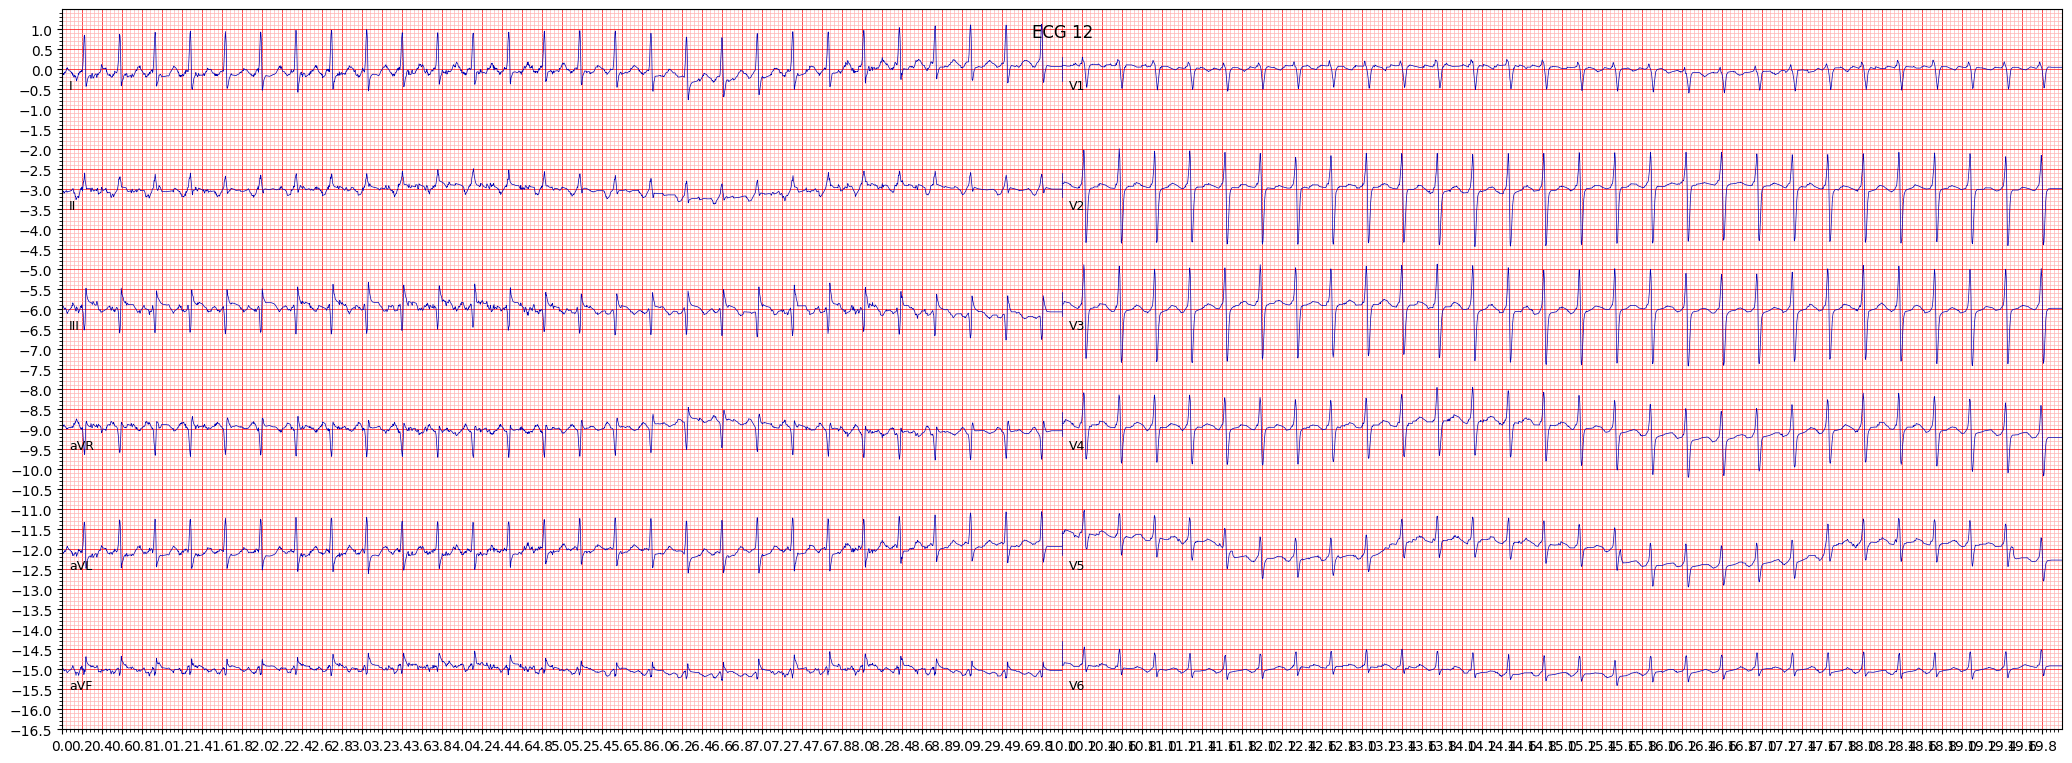 paroxysmal supraventricular tachycardia (PSVT) example 3134